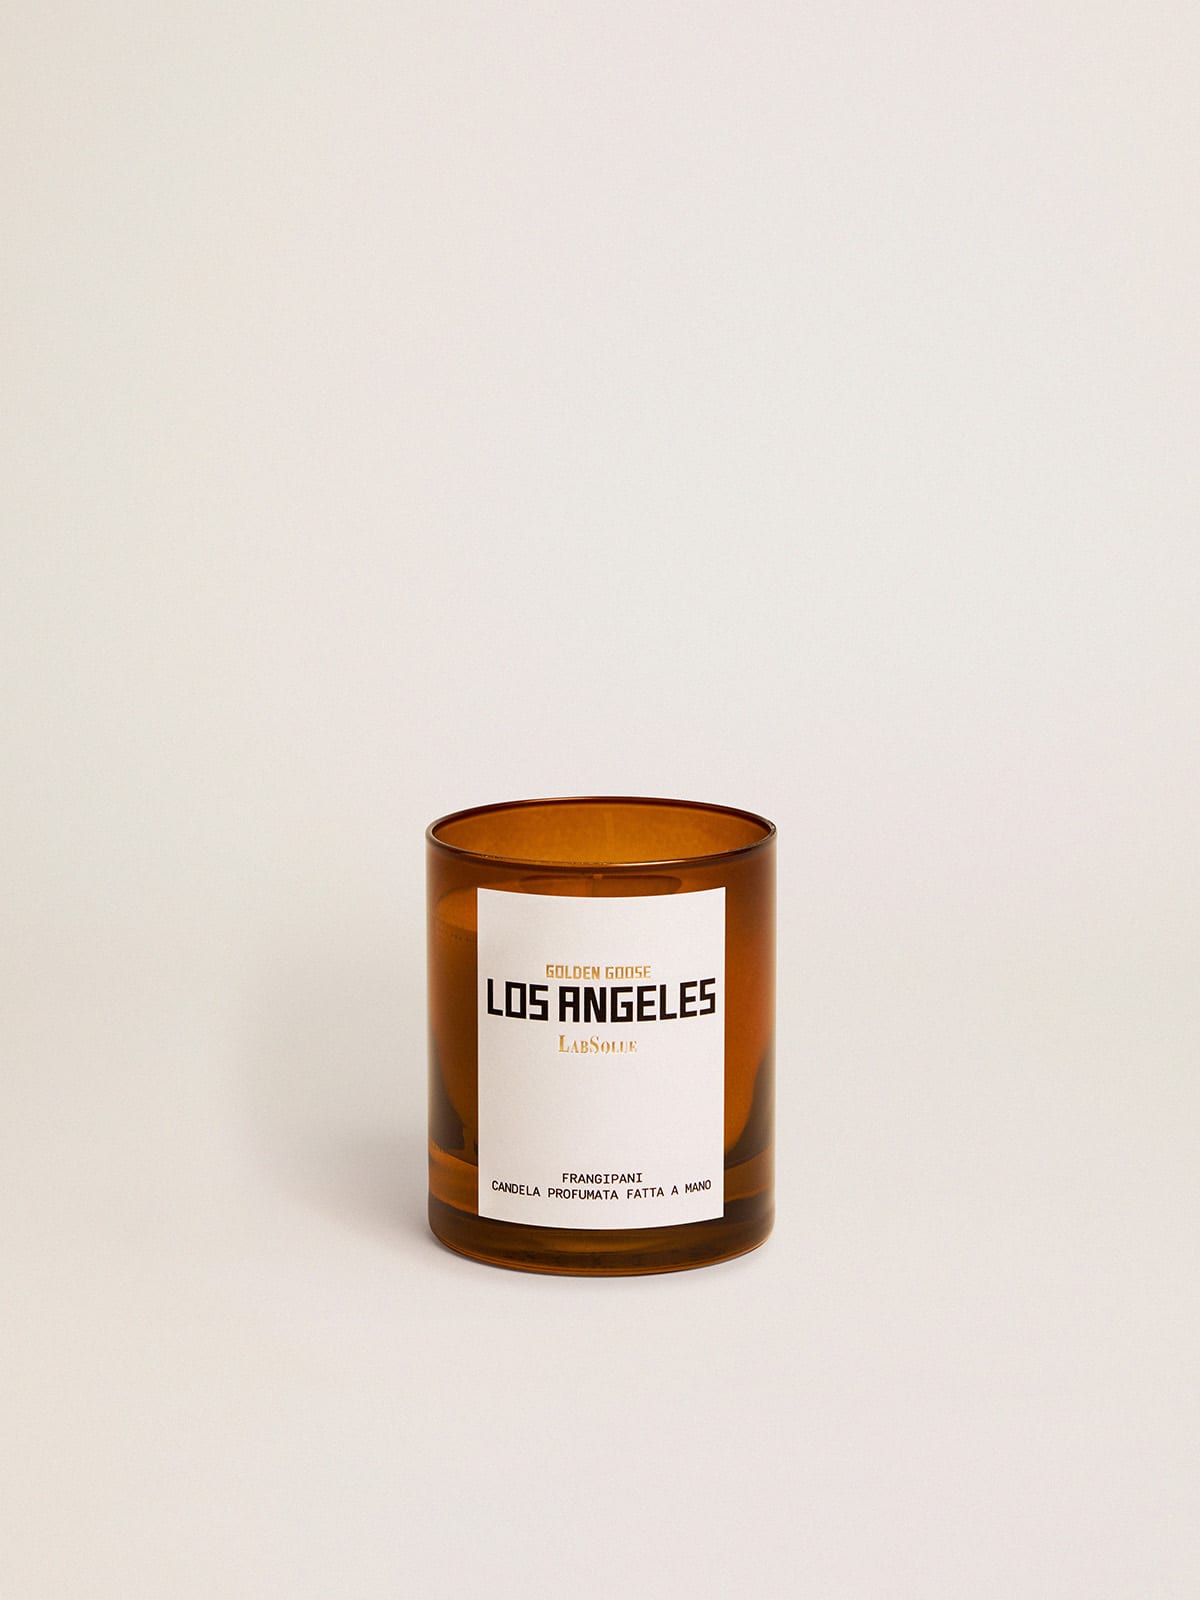 Golden Goose - Los Angeles Essence Franchipán vela aromática 200 g in 